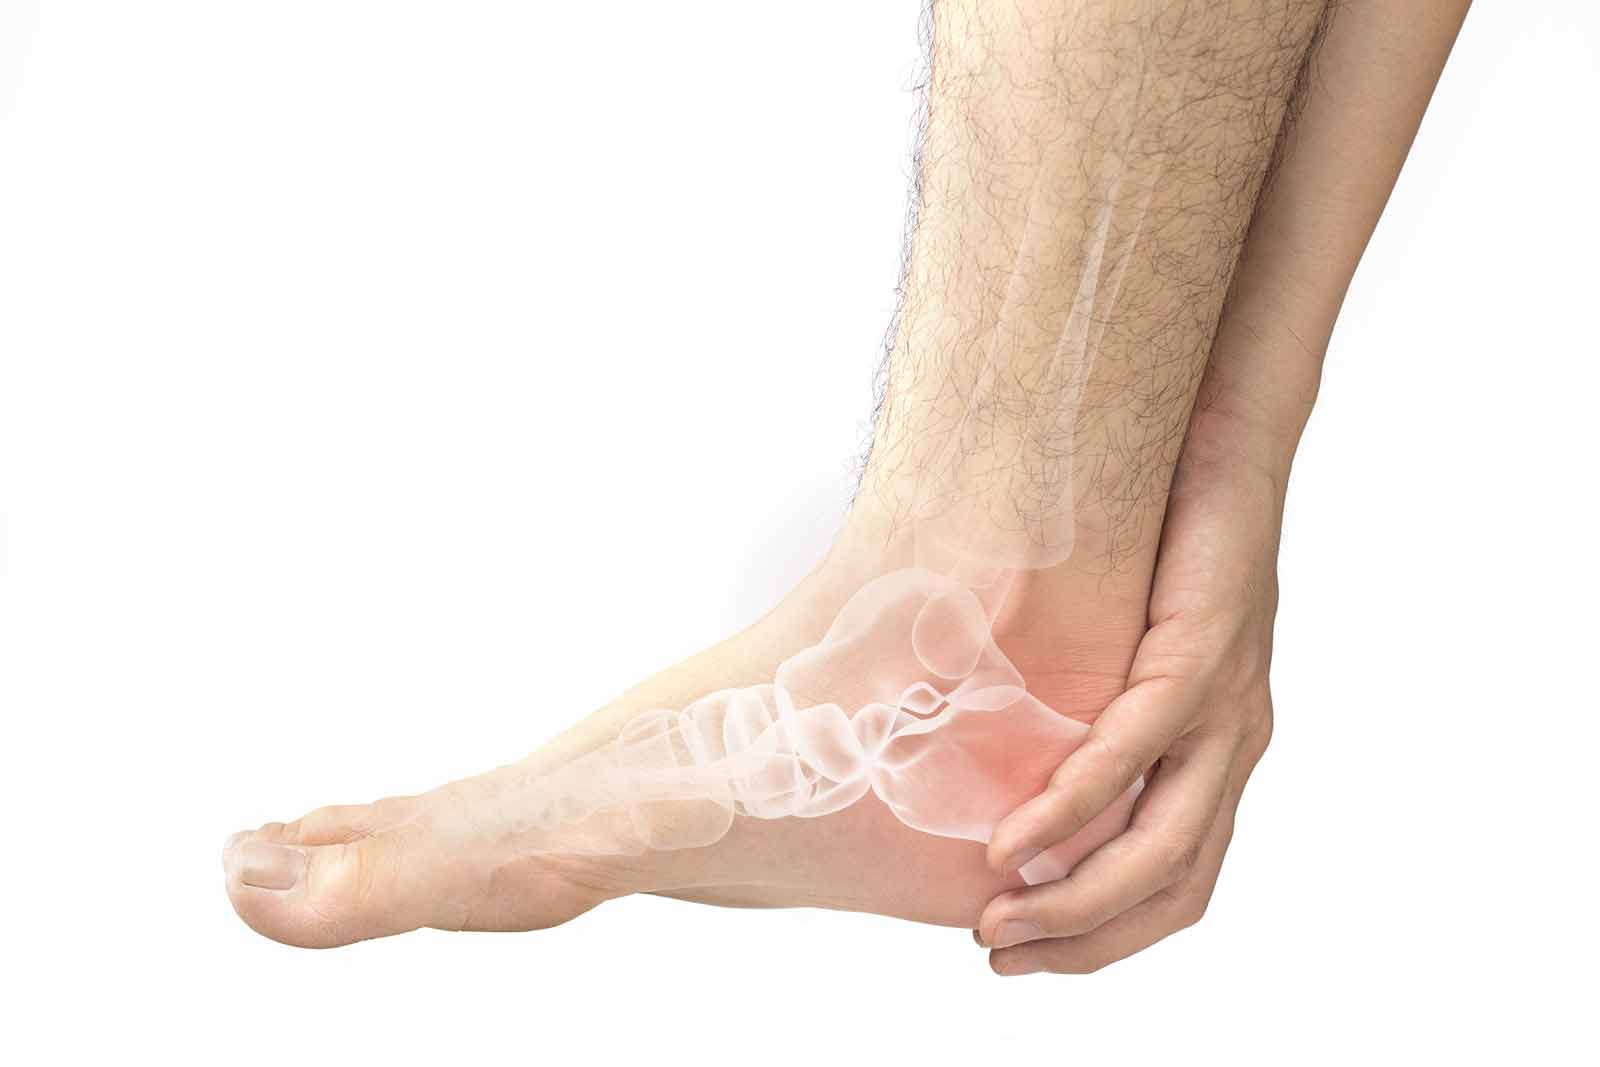 pain and numbness in foot bones